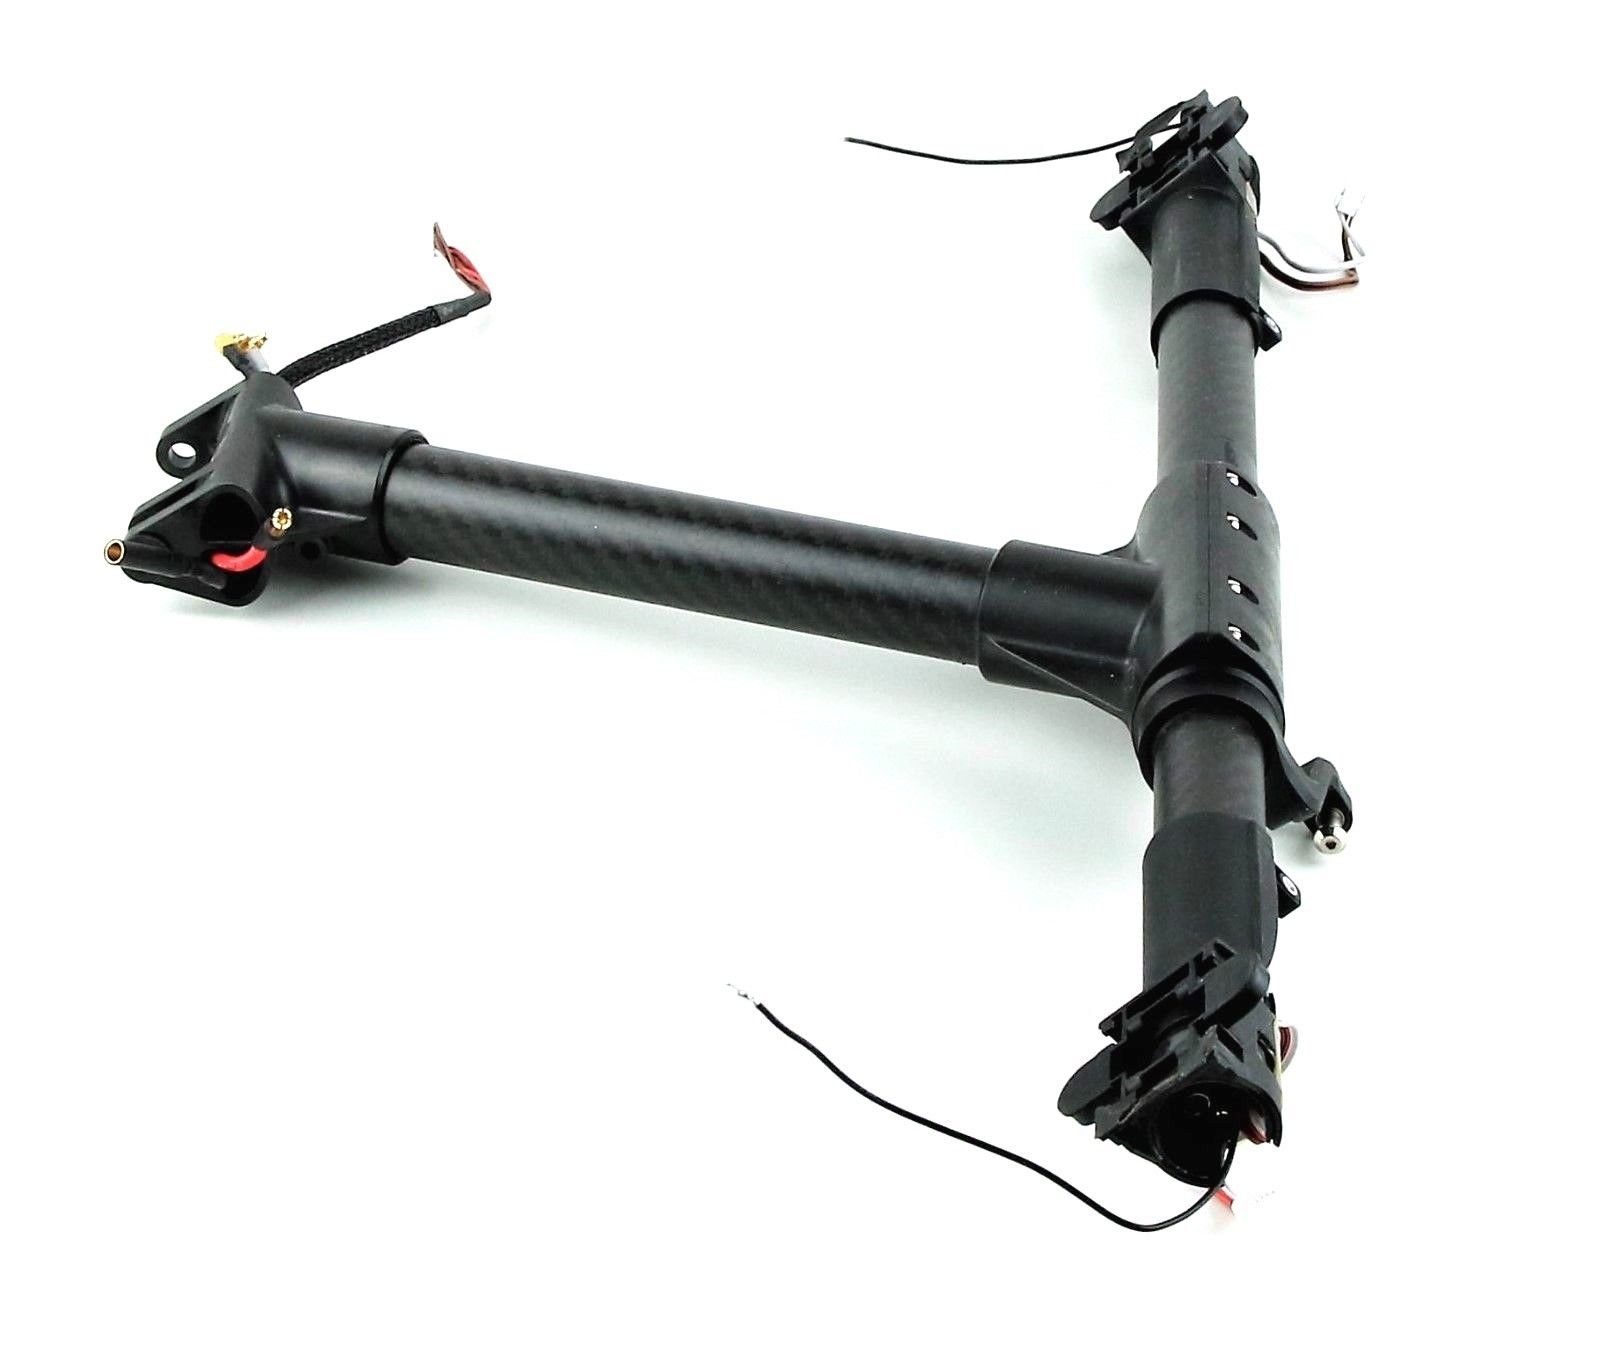 DJI DJI Inspire 1 - T600 linker Arm (Set) (Neu) Zubehör Drohne